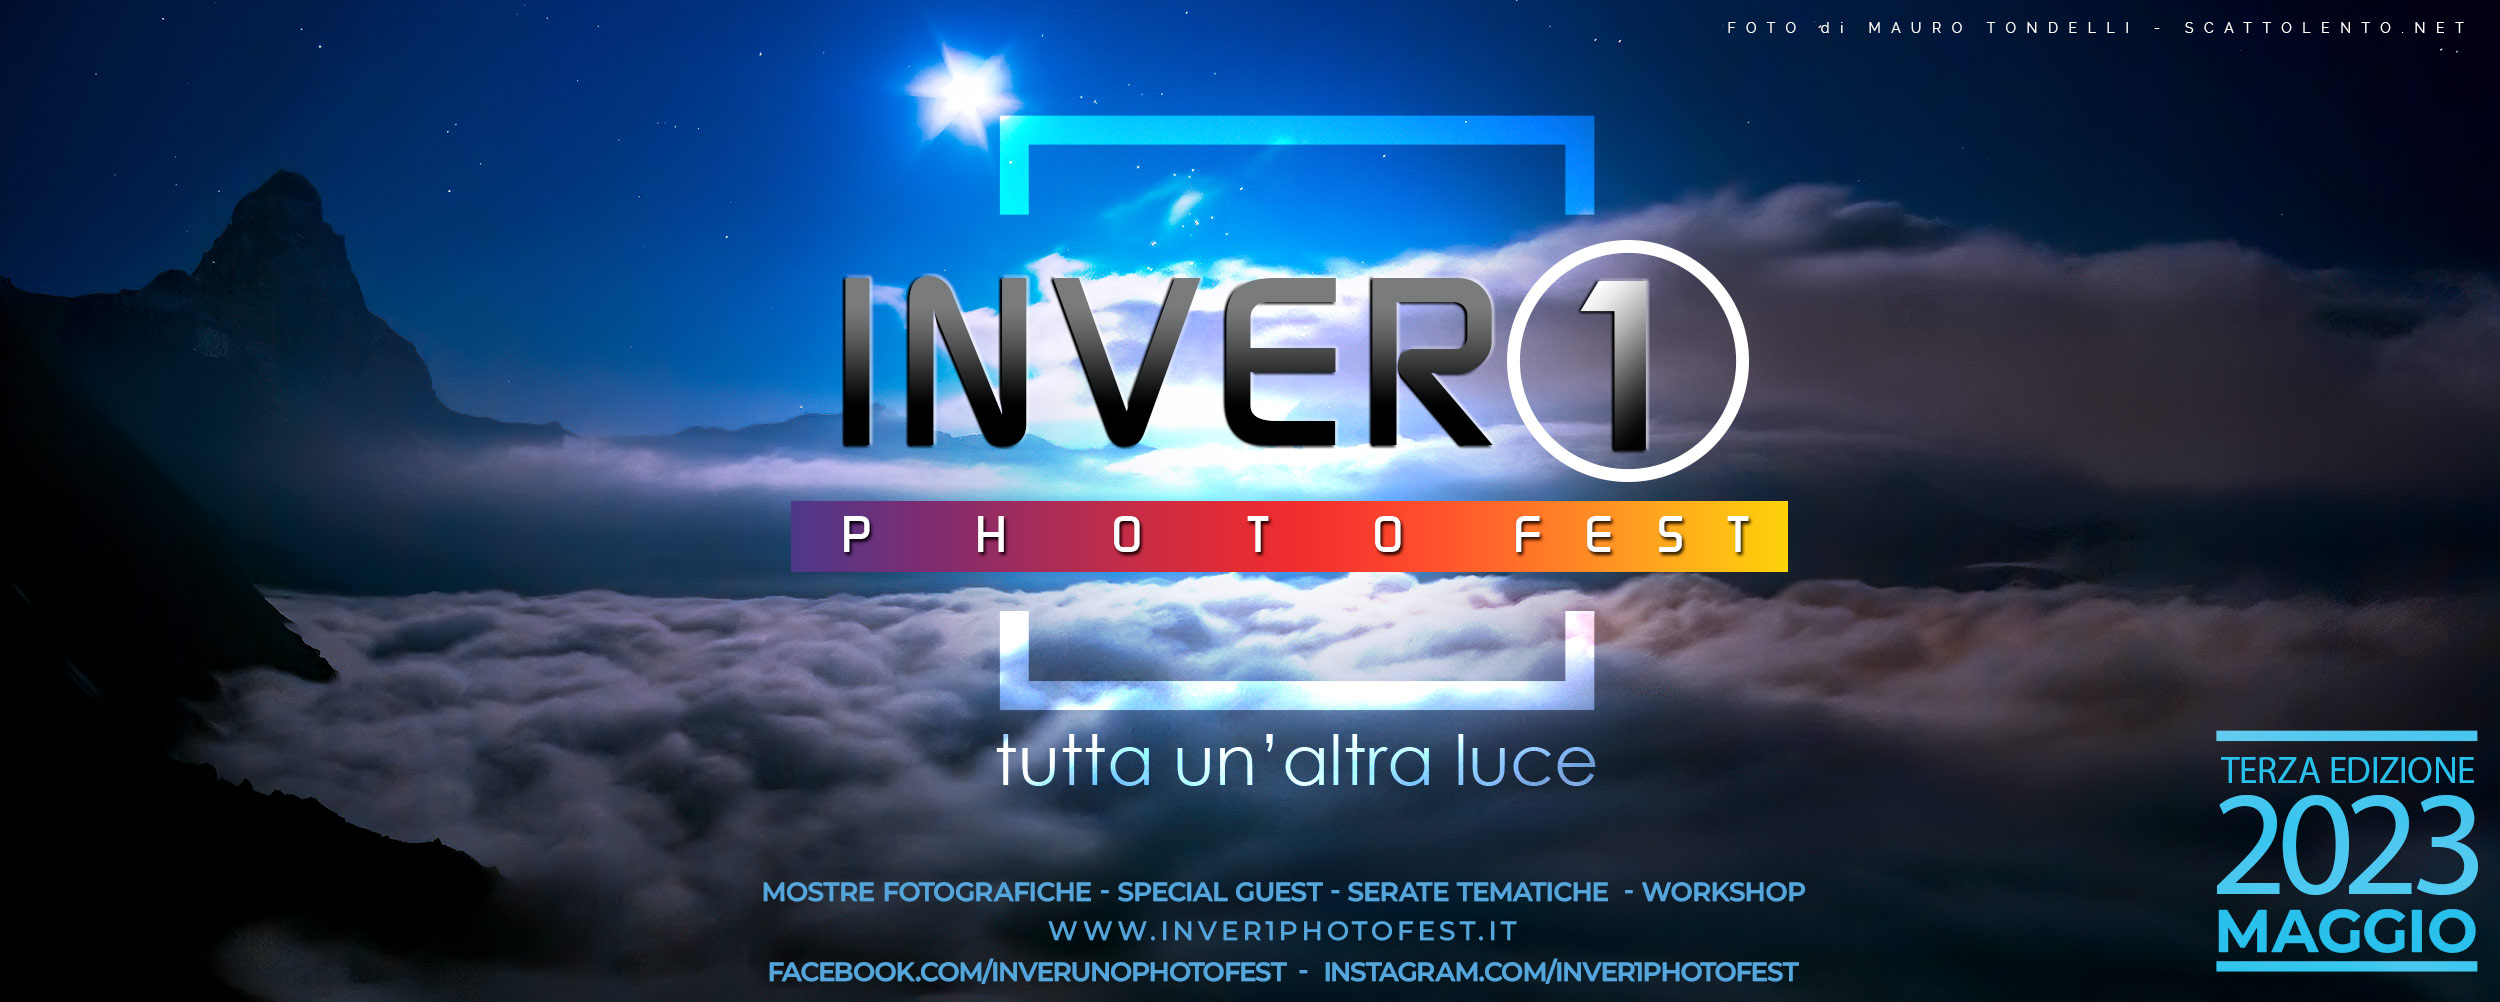 Inver1 Photo Fest